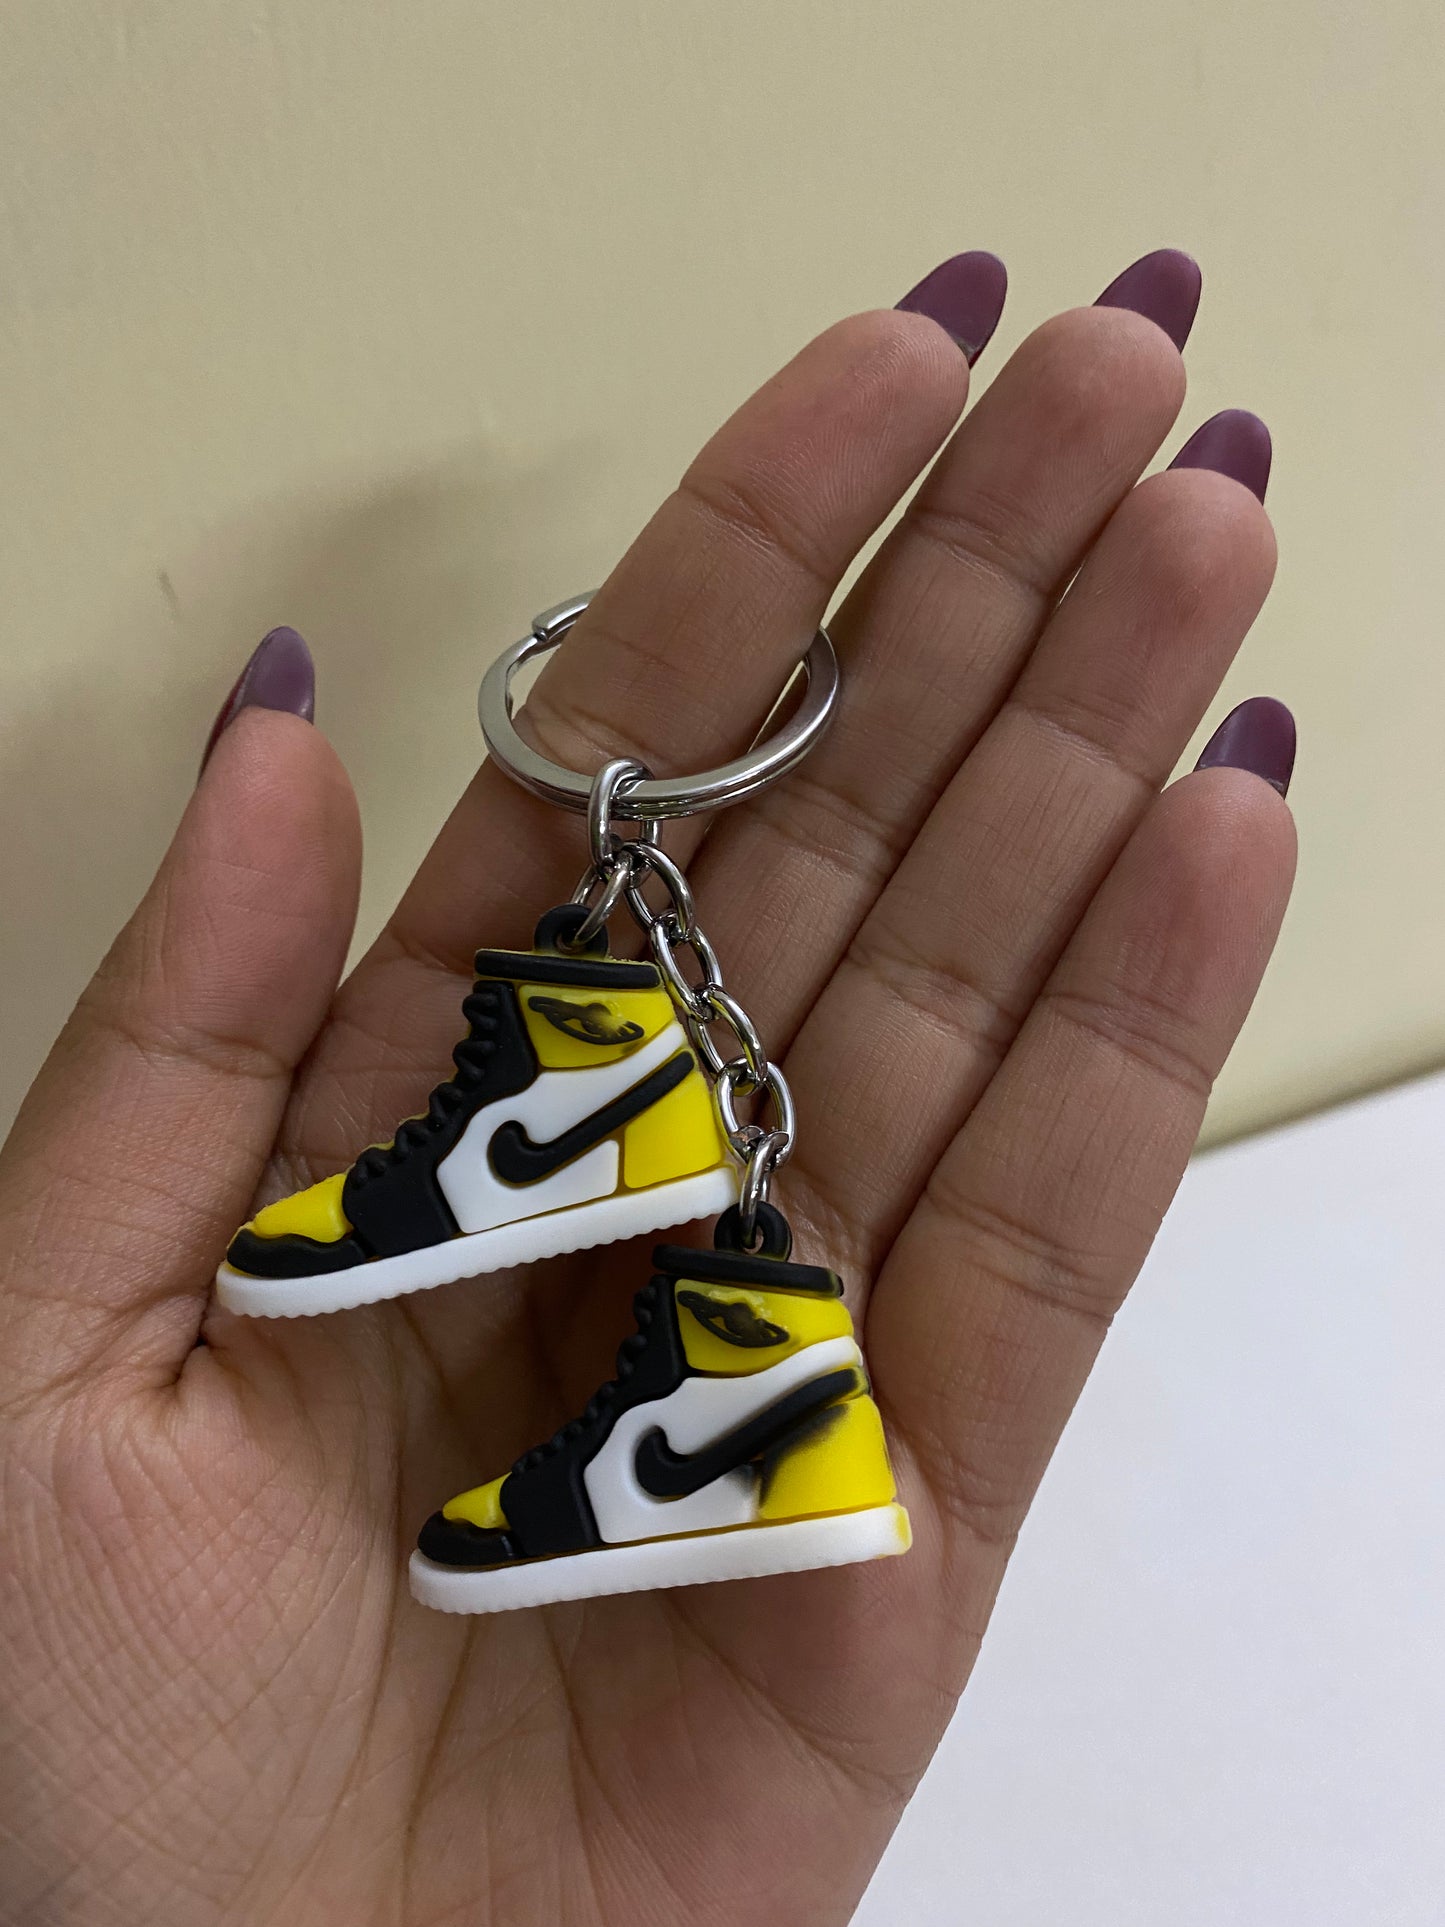 Sneakers keychain